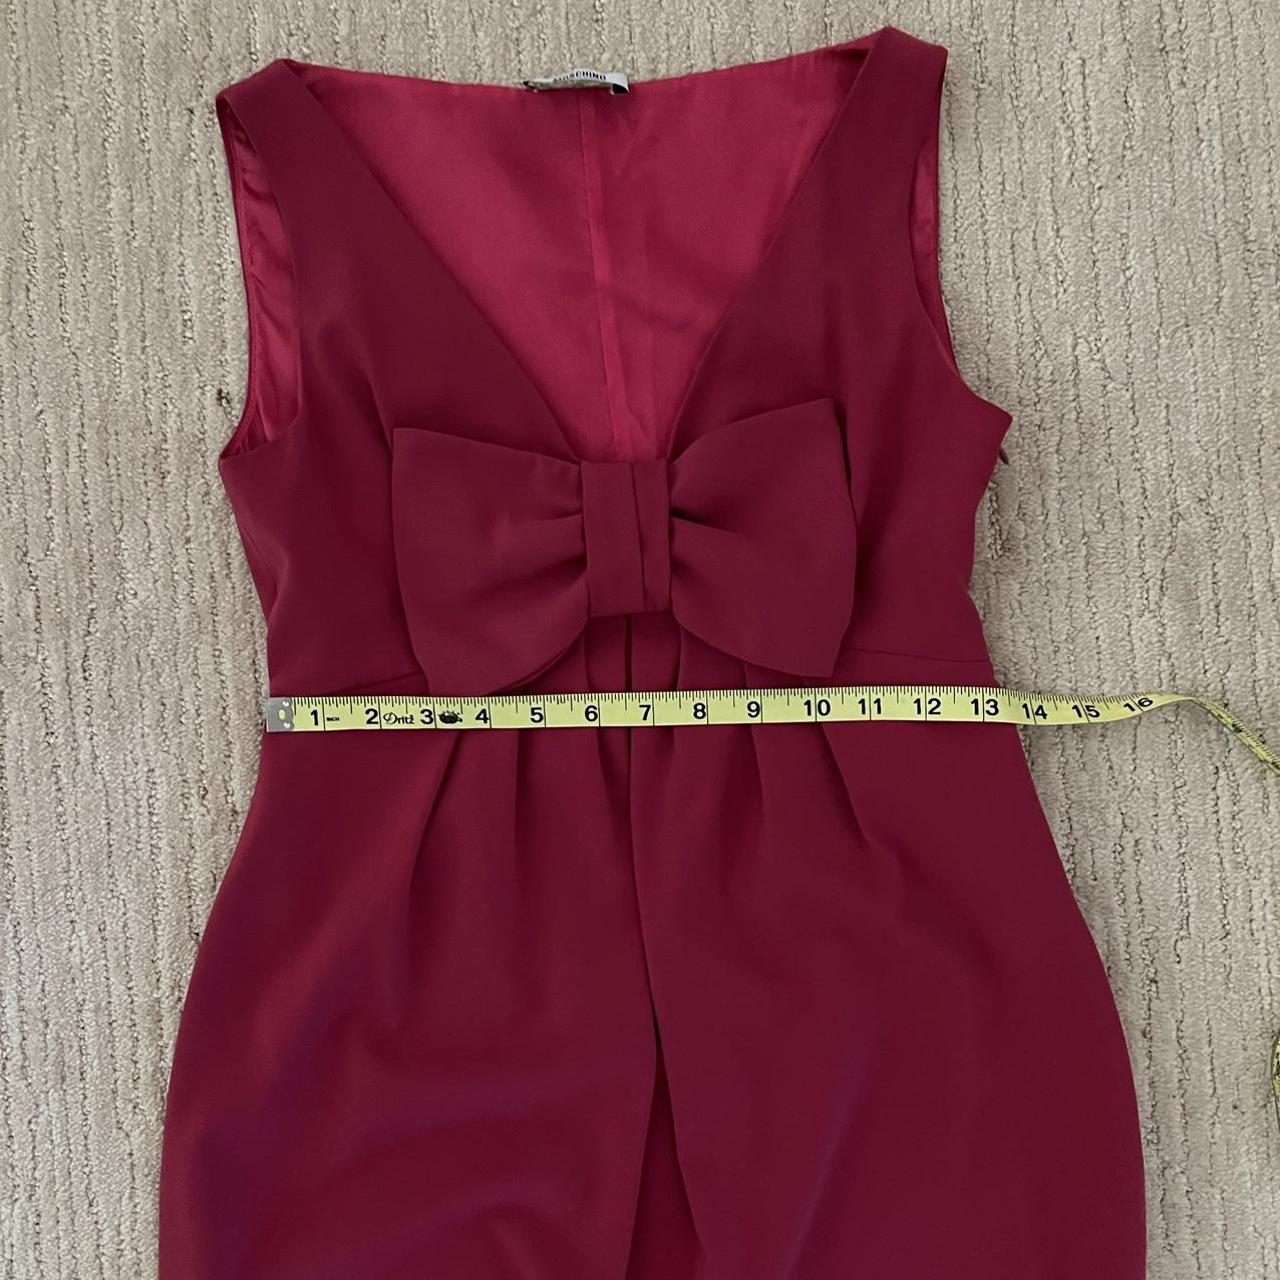 Moschino Cheap & Chic Women's Pink Dress (5)